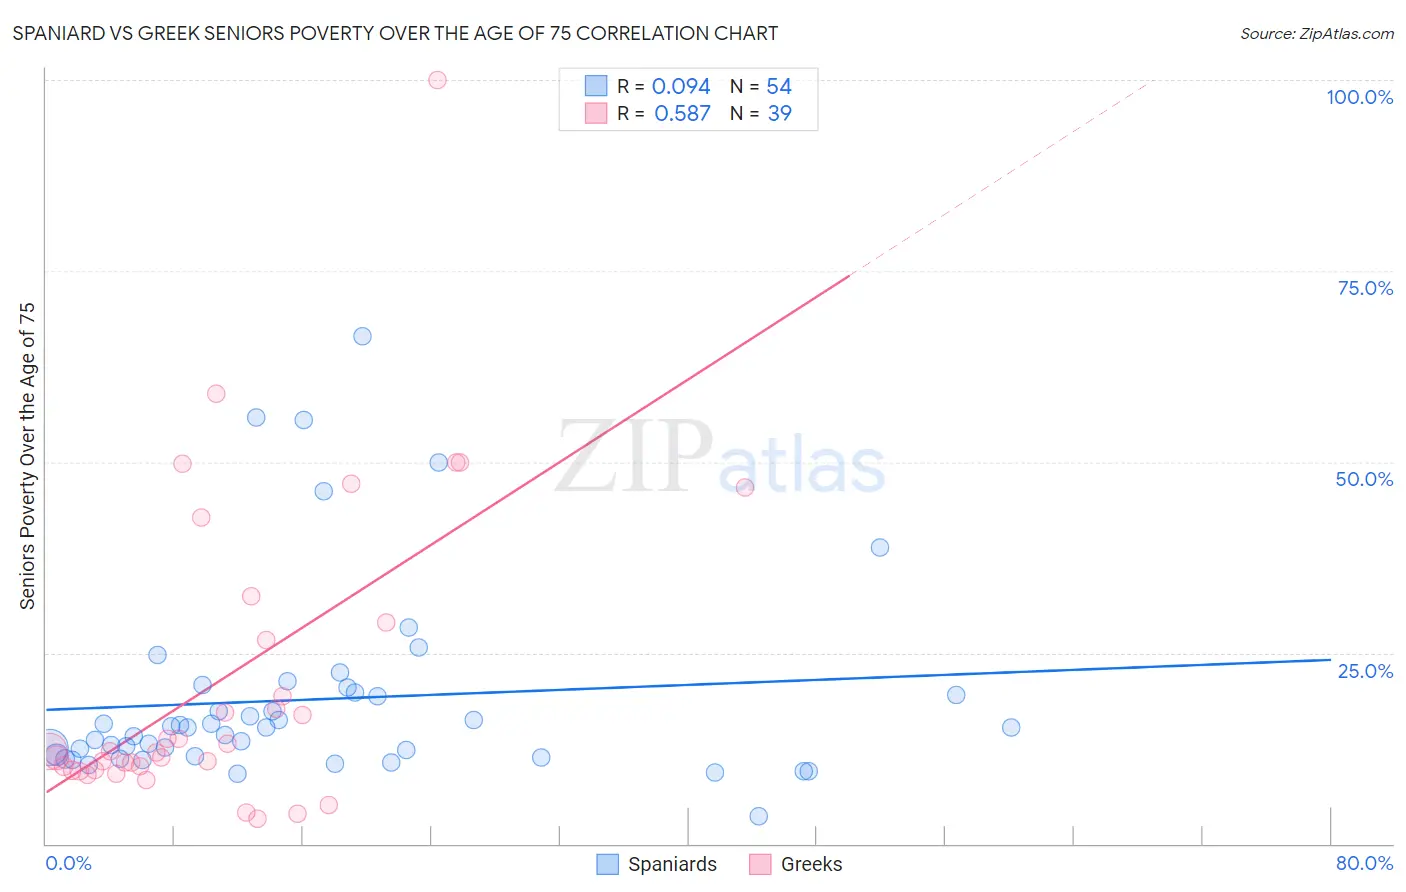 Spaniard vs Greek Seniors Poverty Over the Age of 75